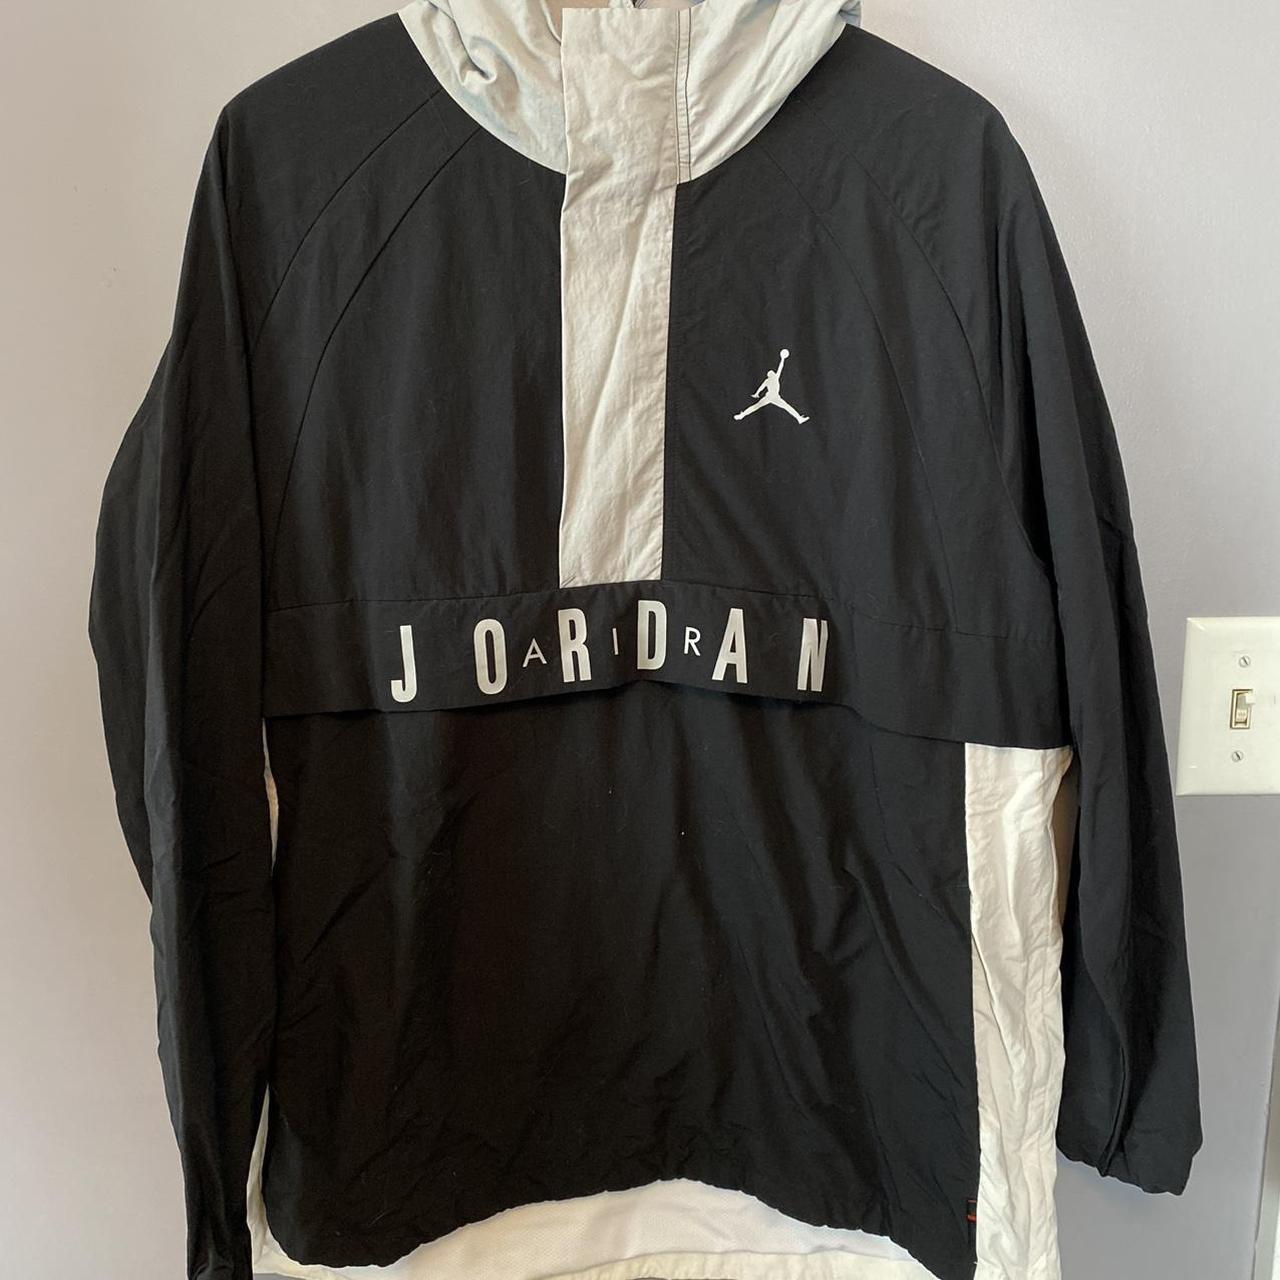 Jordan Men's White and Black Jacket | Depop